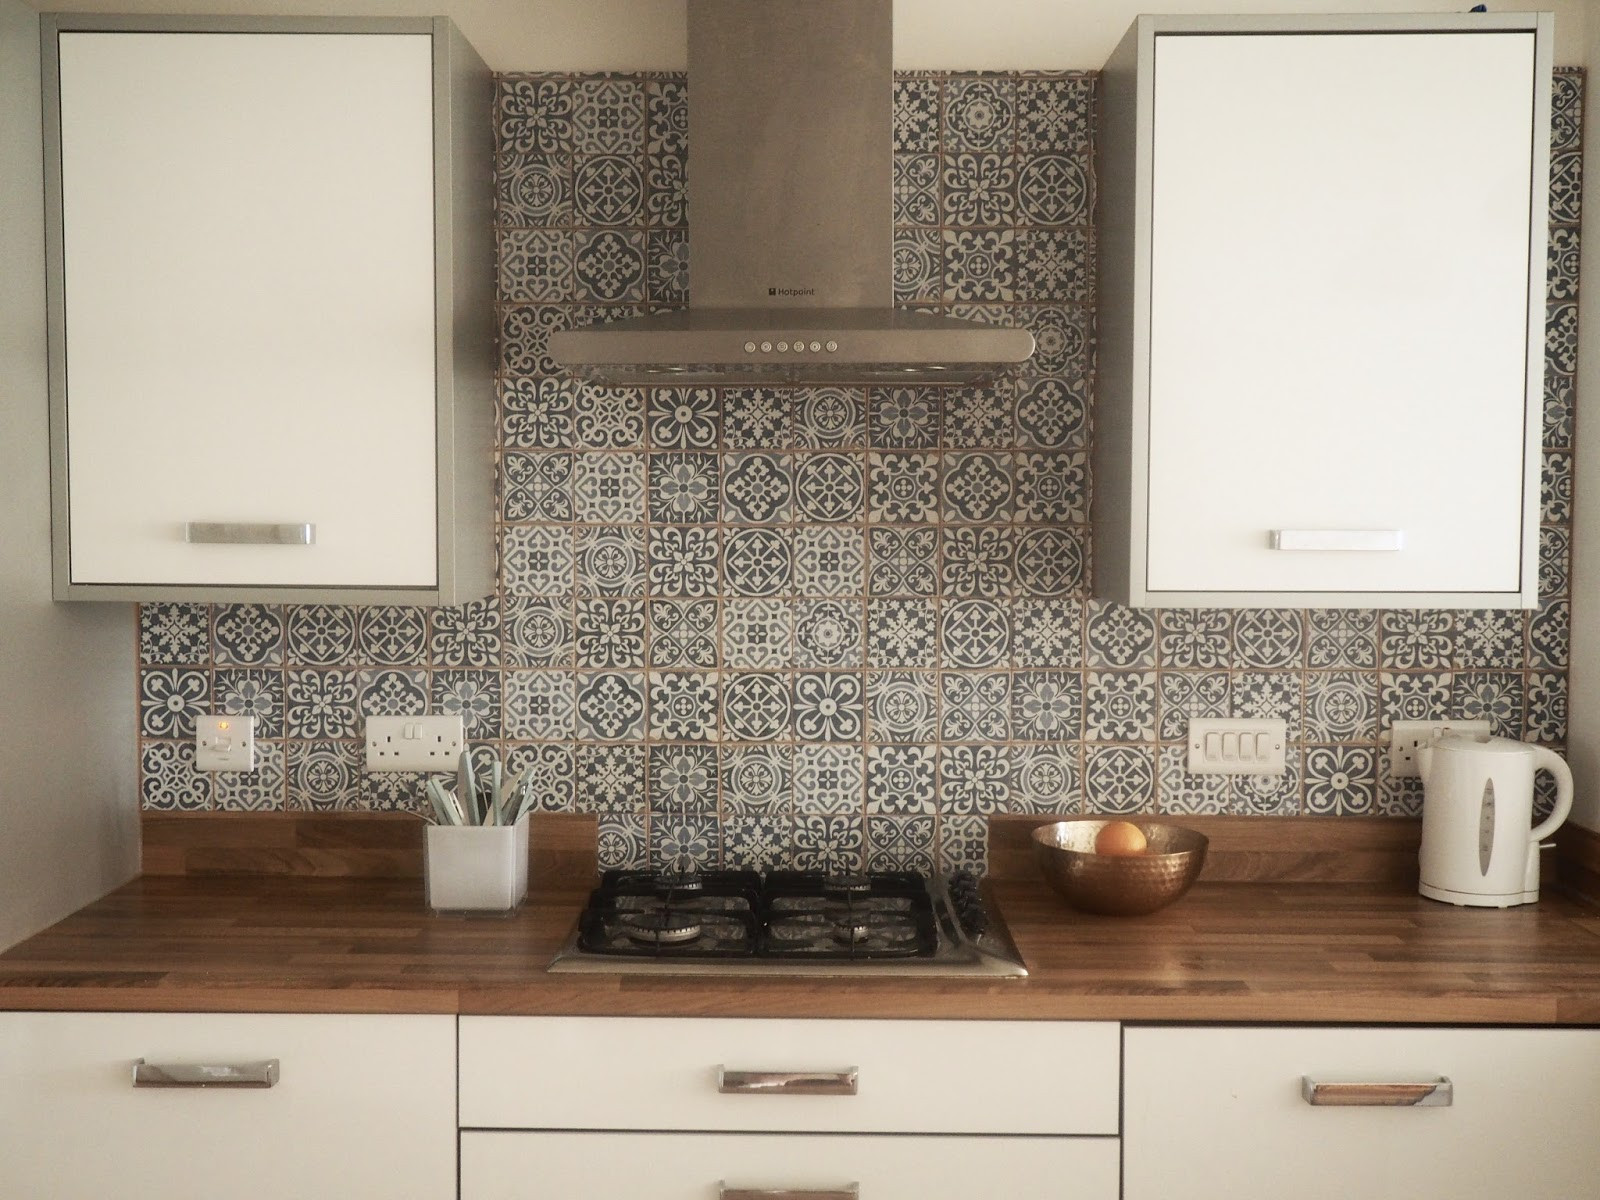 Moroccan Tile Backsplash Kitchen
 OUR NEW MOROCCAN KITCHEN TILES BEFORE & AFTER